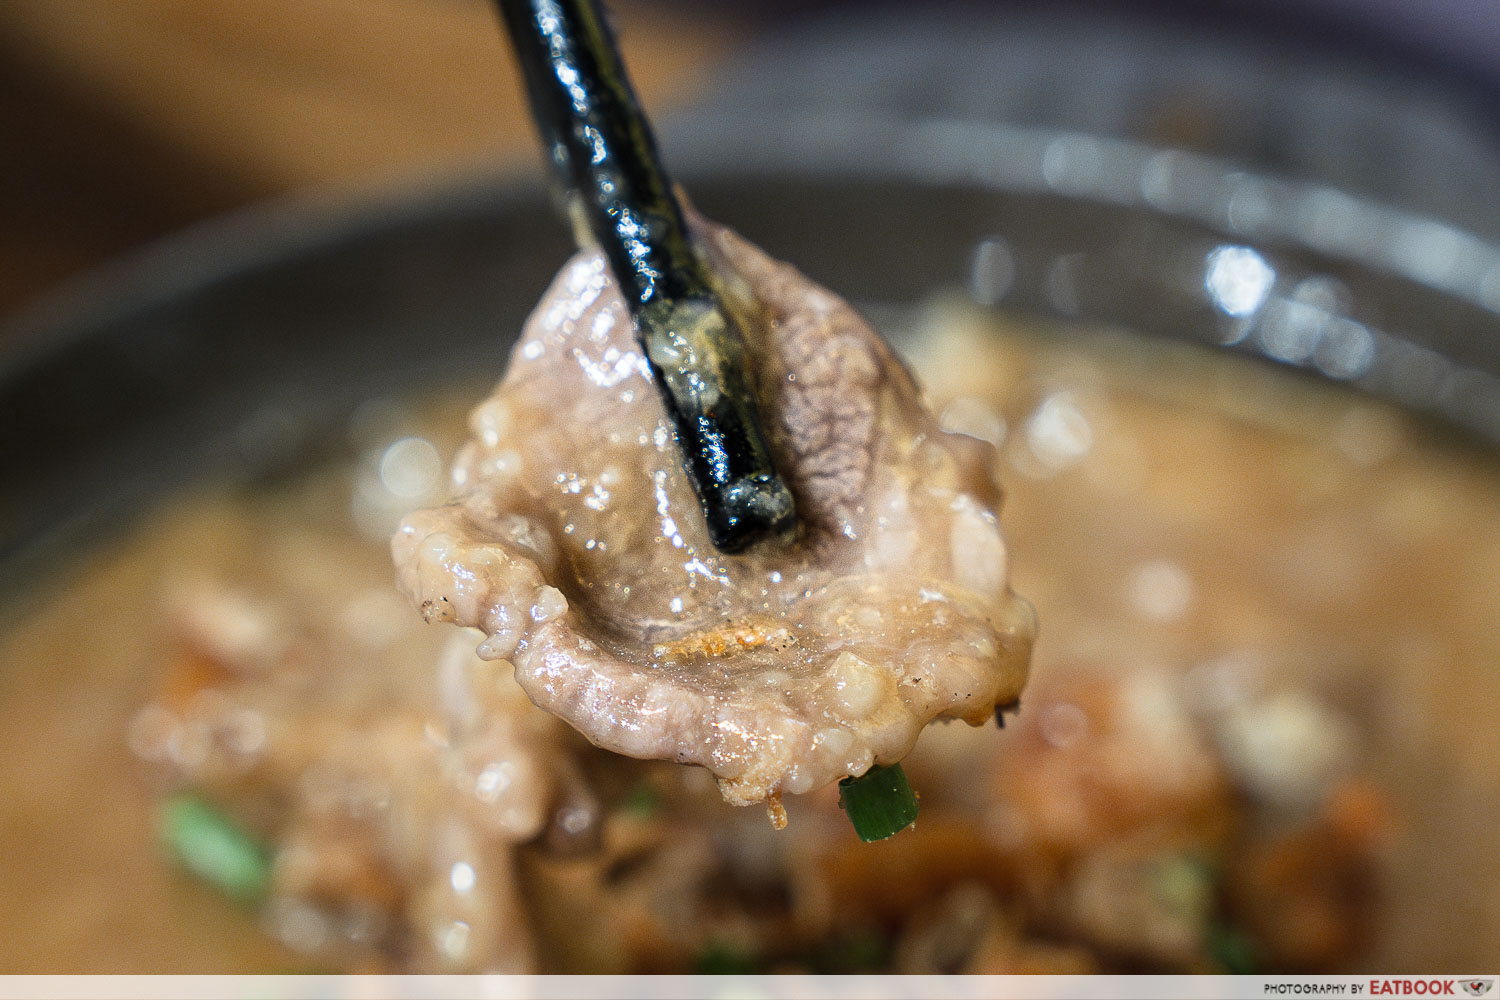 feng-xiang-bak-kut-teh-iberico-pork-fried-porridge-interaction